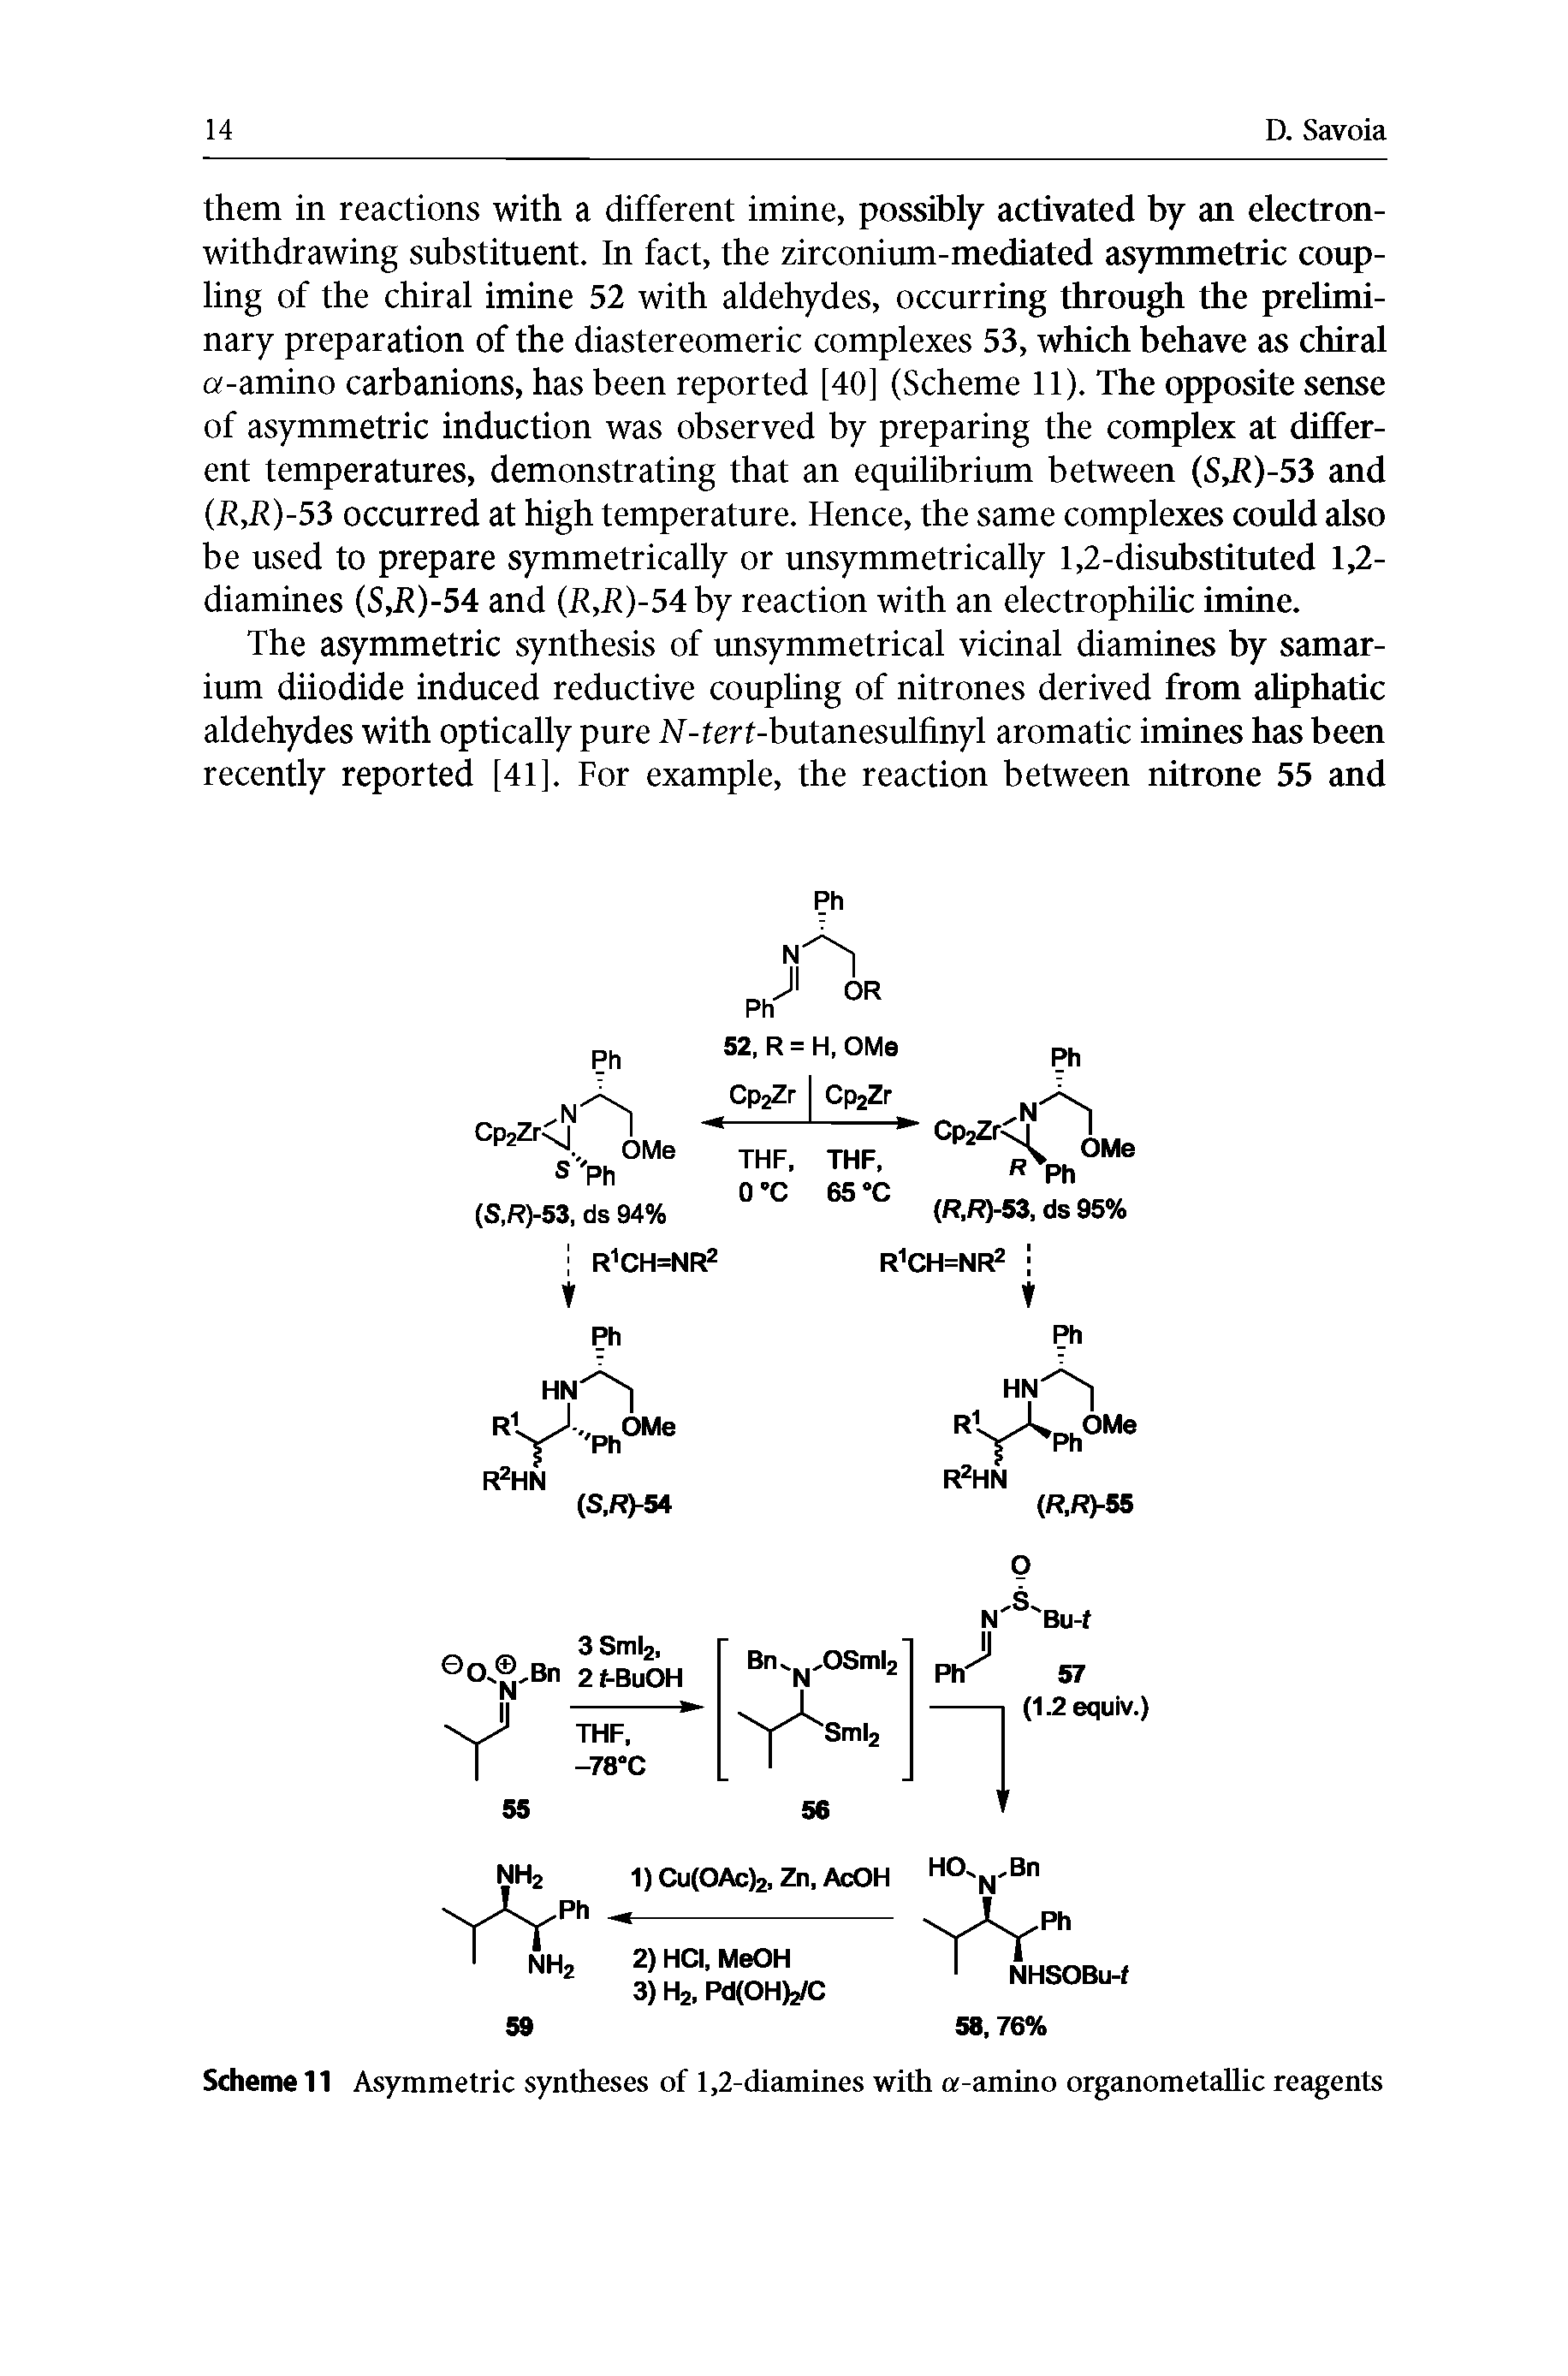 Scheme 11 Asymmetric syntheses of 1,2-diamines with a-amino organometallic reagents...